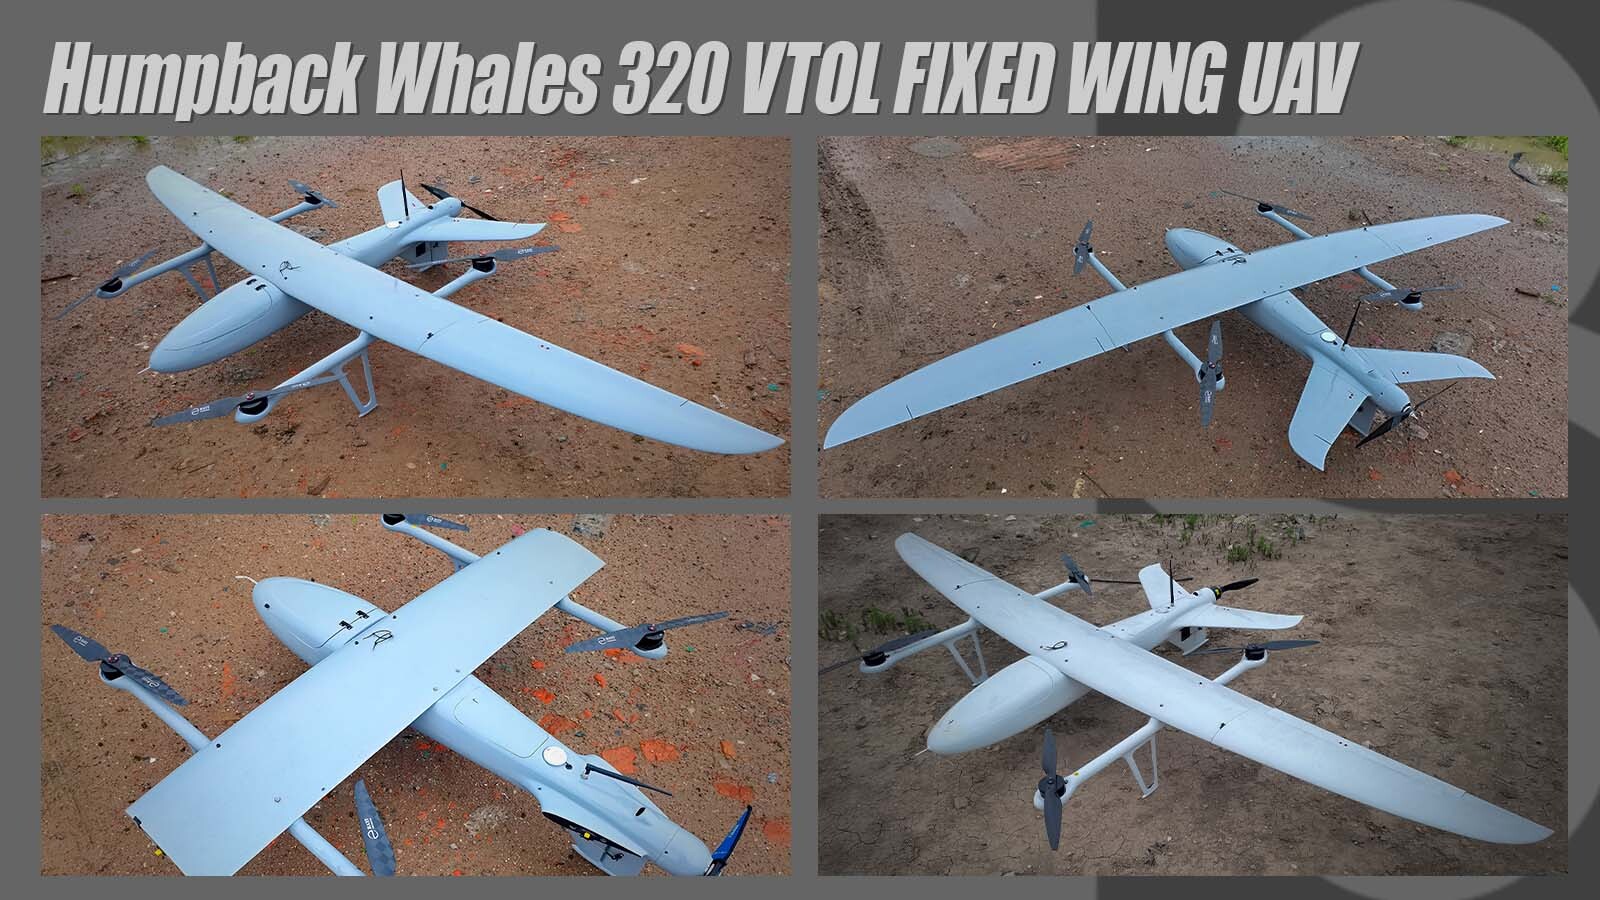 Humpback Whale W-32 320 VTOL FIXED WING UAV Humpback Whales 320 VTOL FIXED WING UAV vtol,uav,unmannedaircraft,aviation,drones,uavs,vtoluav,unmannedsystems,vtolaircraft,vtoldrone,aircraft,uas,surveillance,survey,surveyin